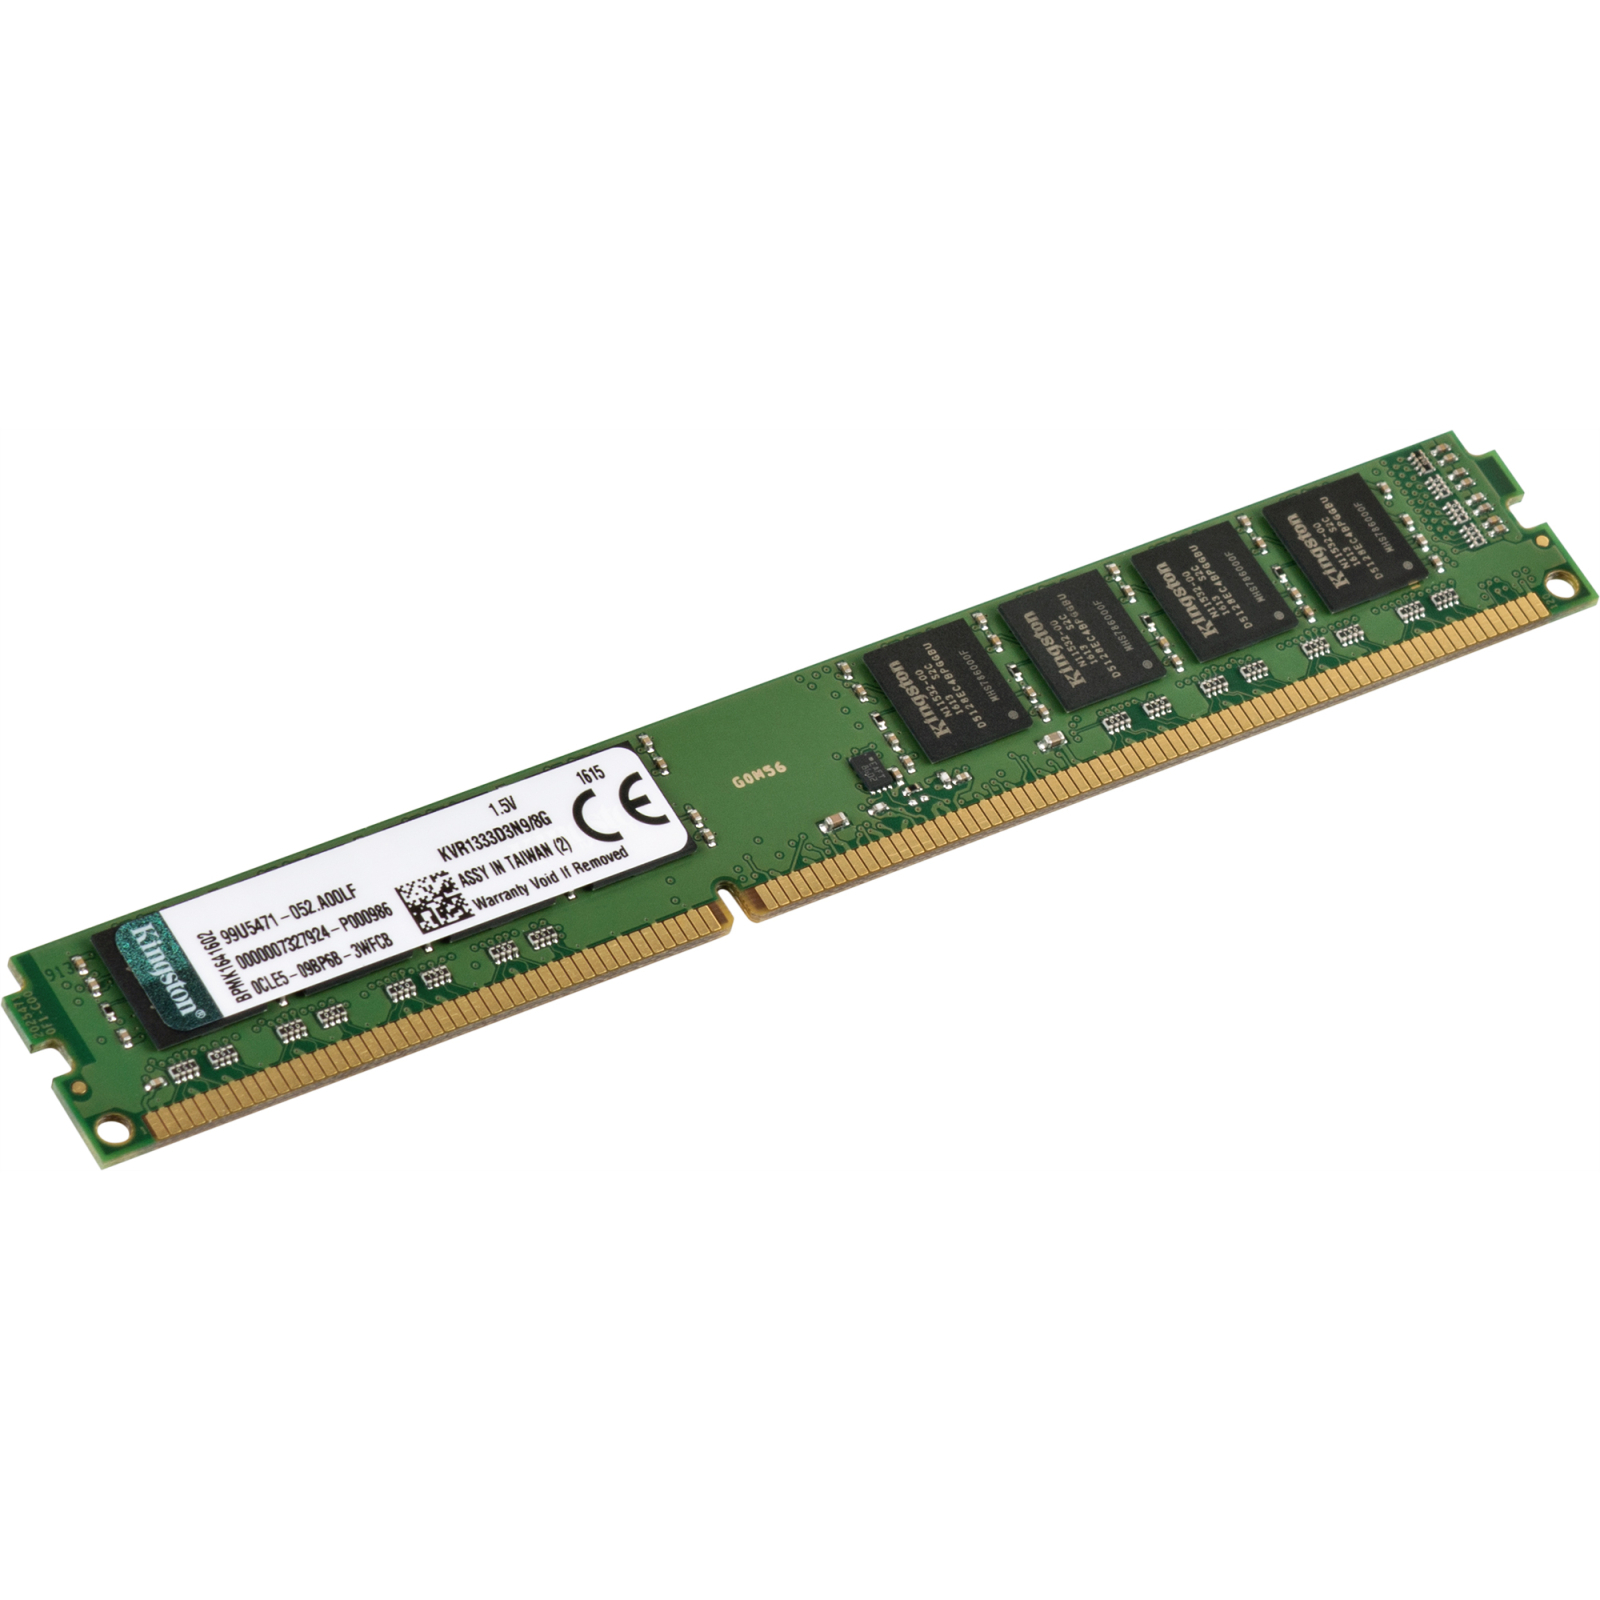 Модуль памяти для компьютера DDR3 1GB 1333 MHz Kingston (KVR1333D3N9/1G) изображение 2